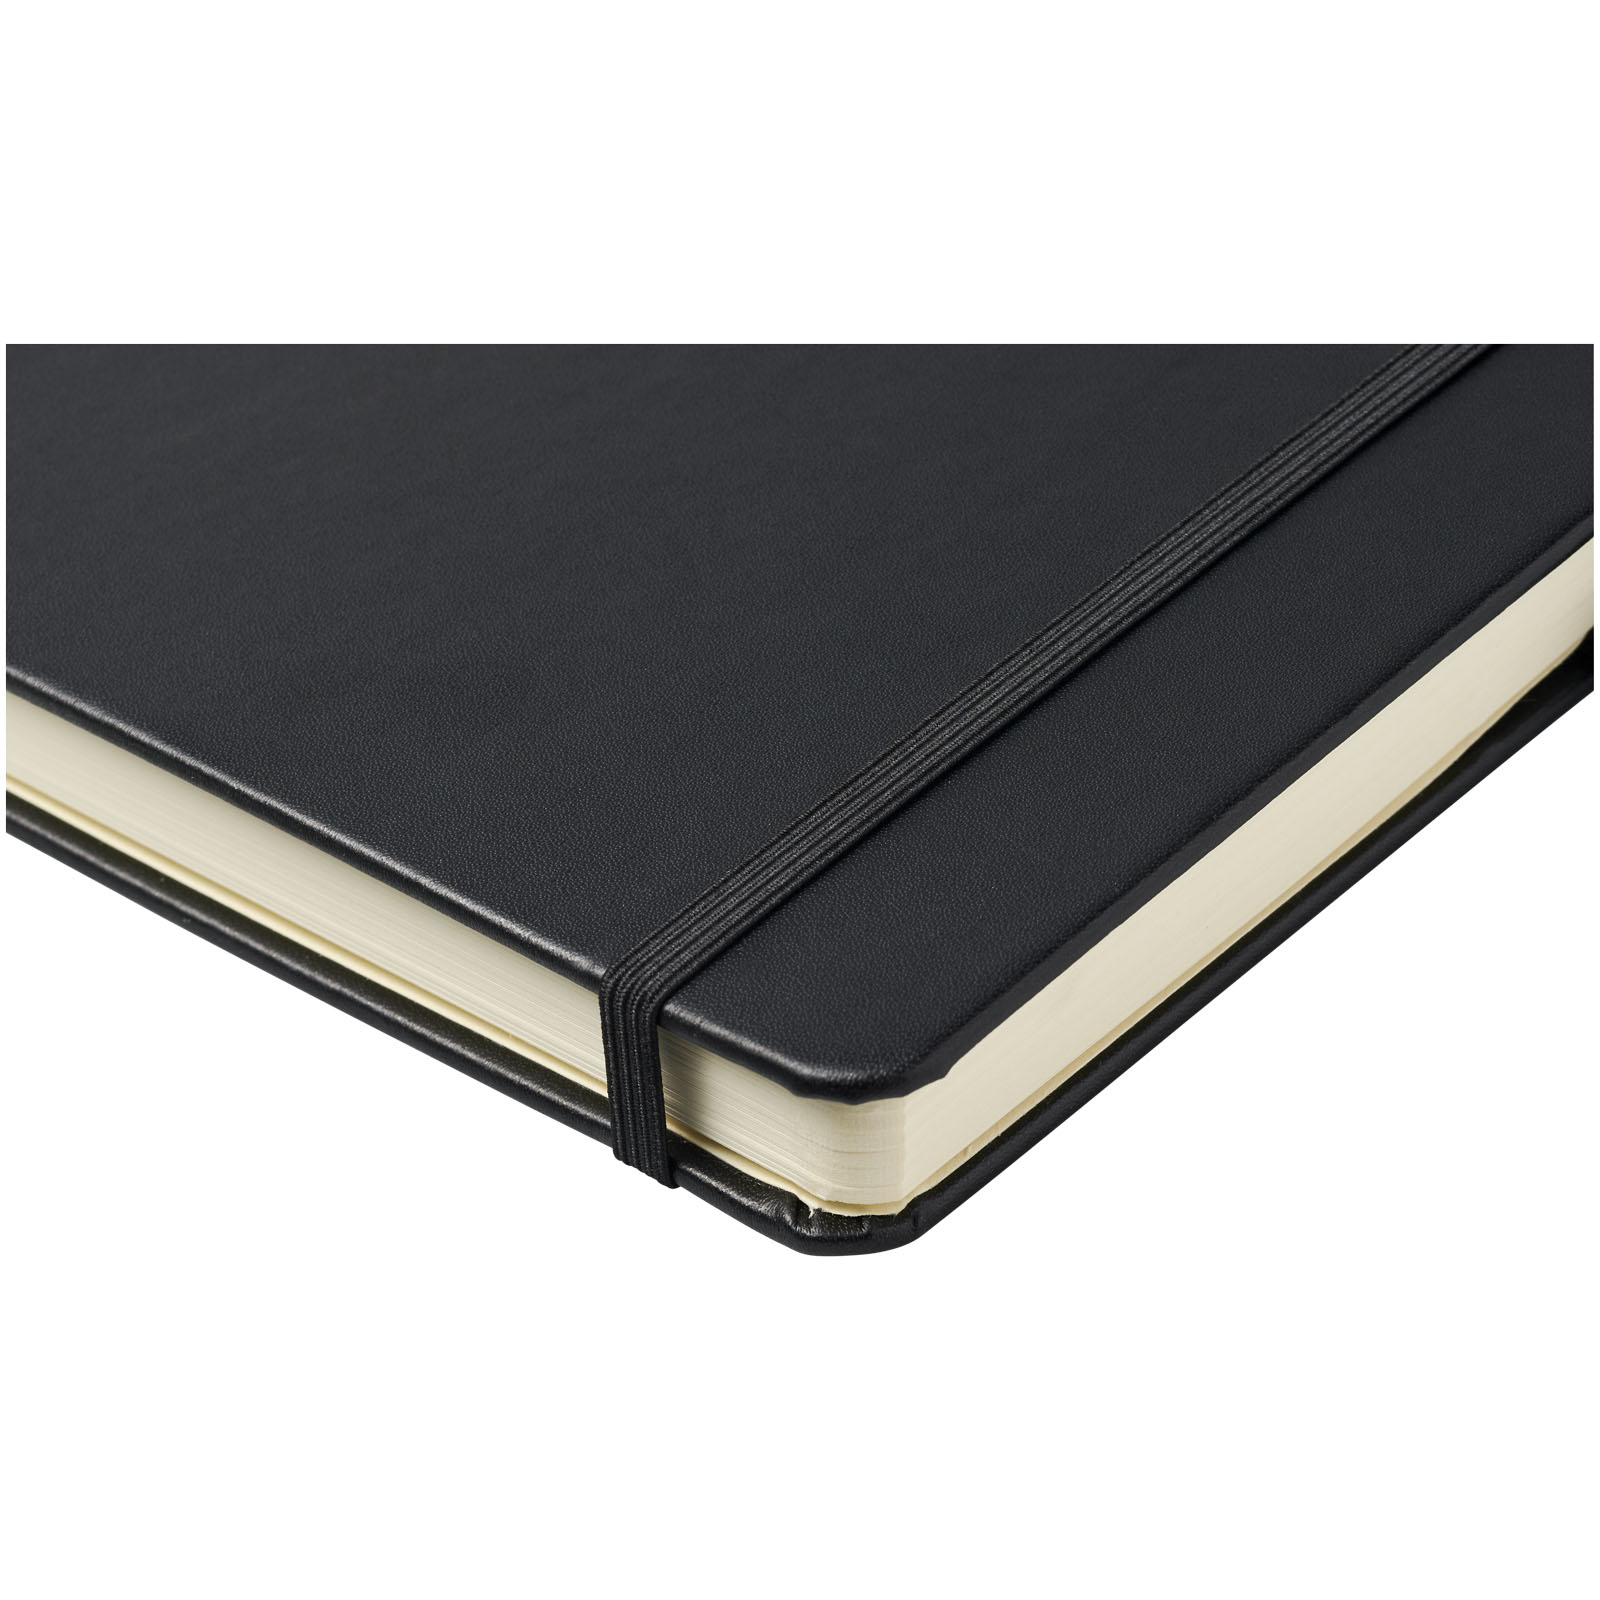 Advertising Hard cover notebooks - Nova A5 bound notebook - 5